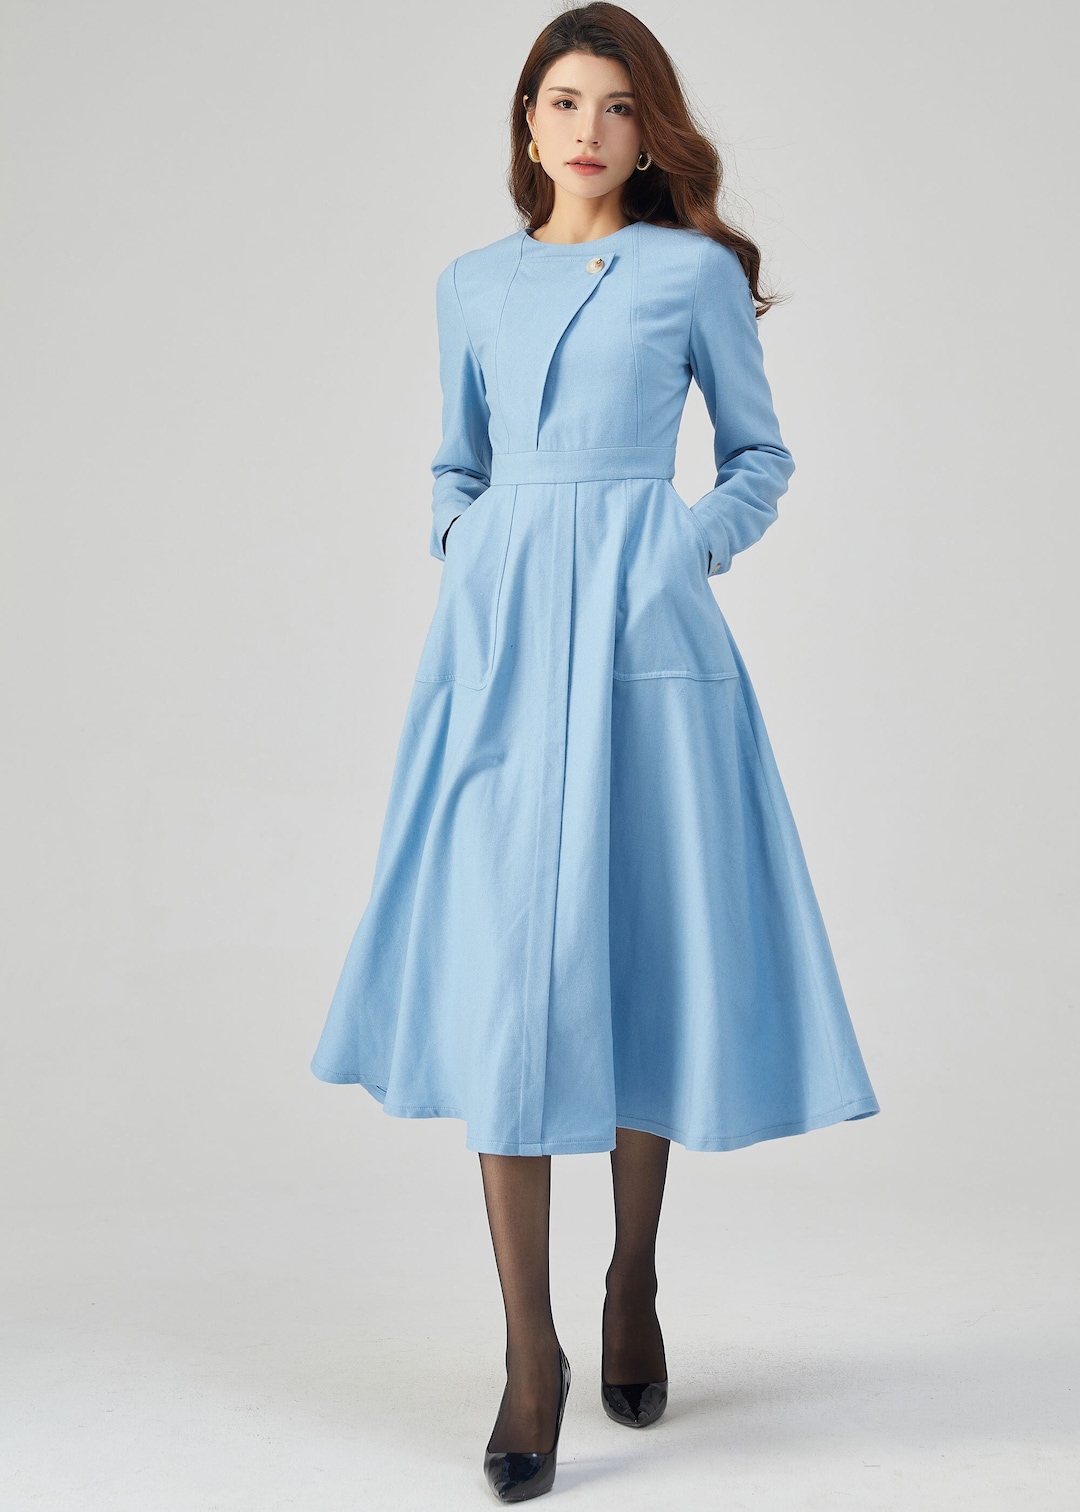 Blue Wool Dress Winter Dress Women Fitted Dress Dress With - Etsy